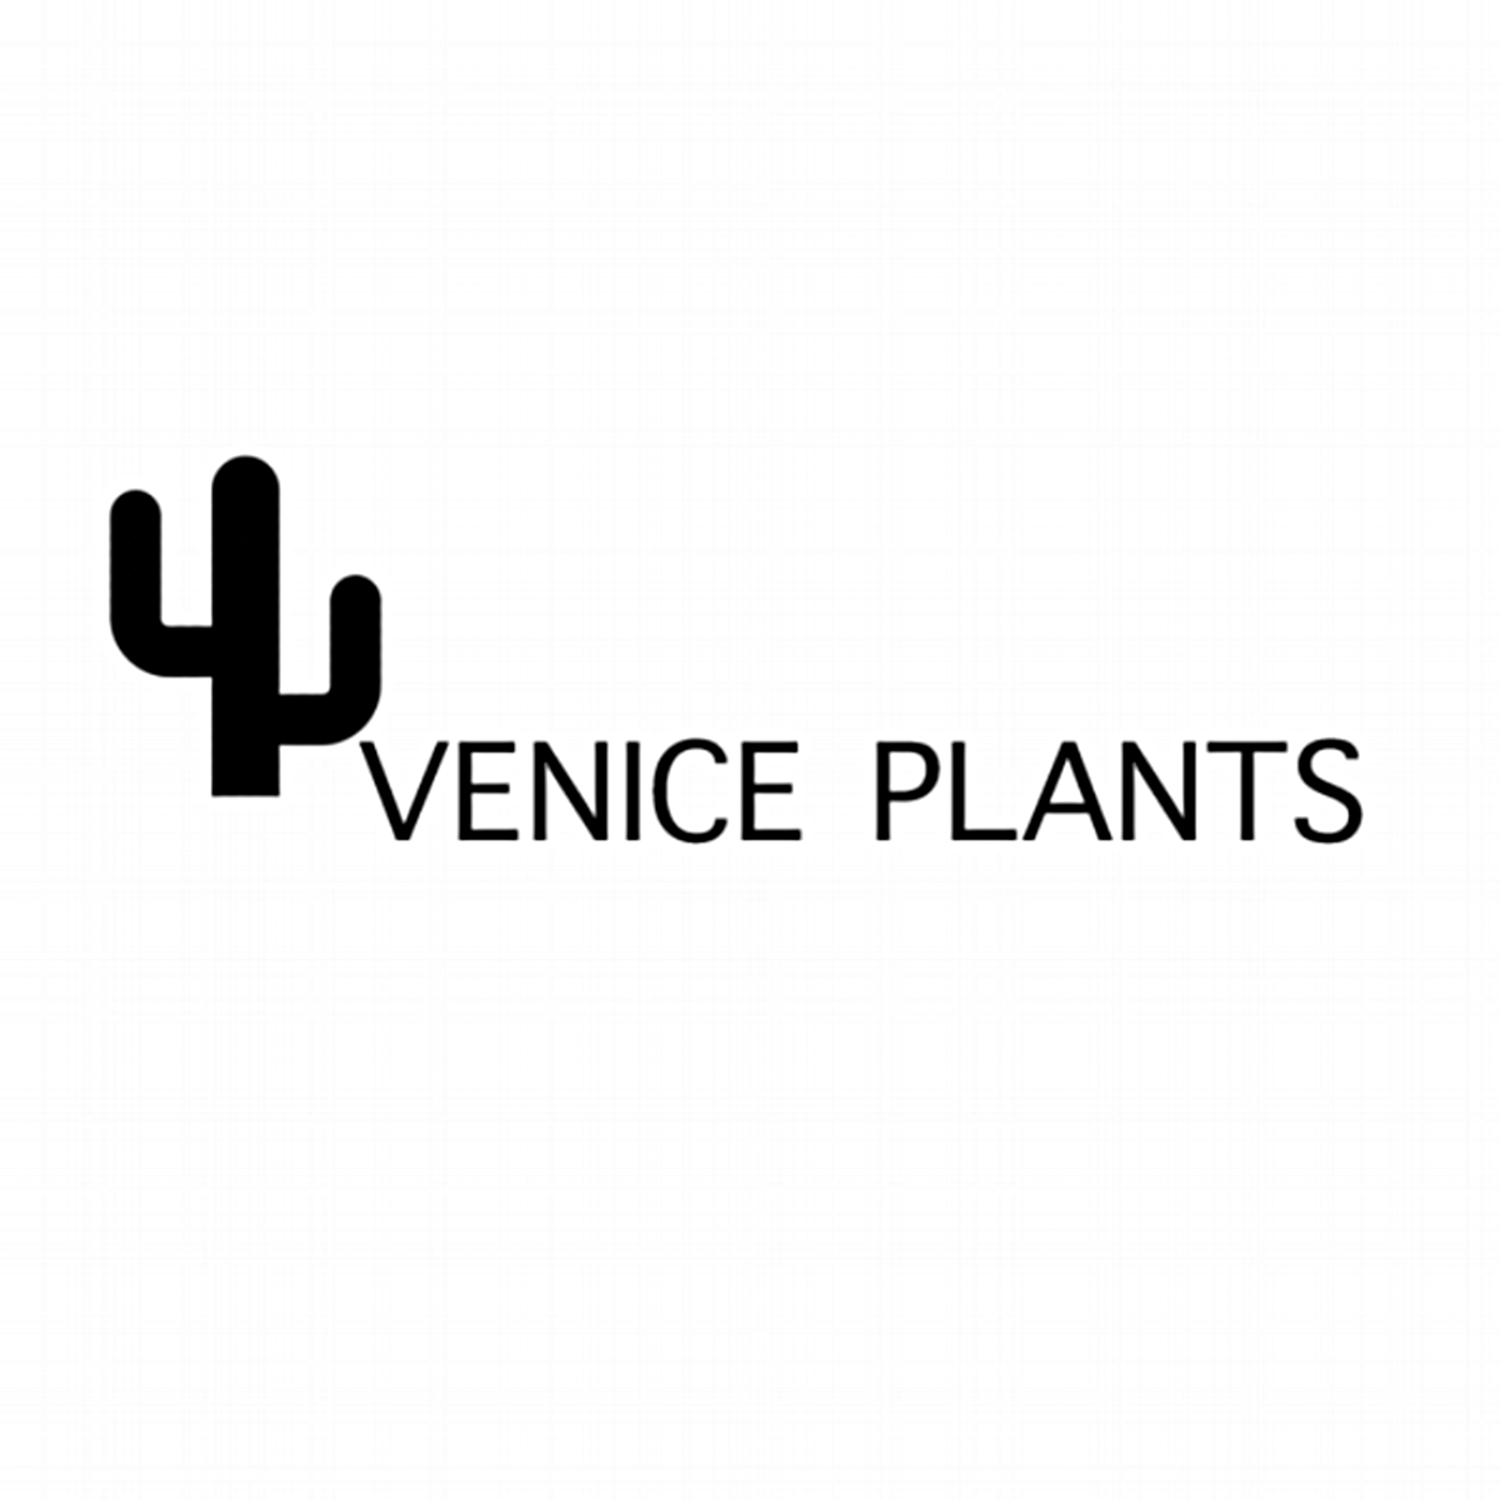 Venice Plants